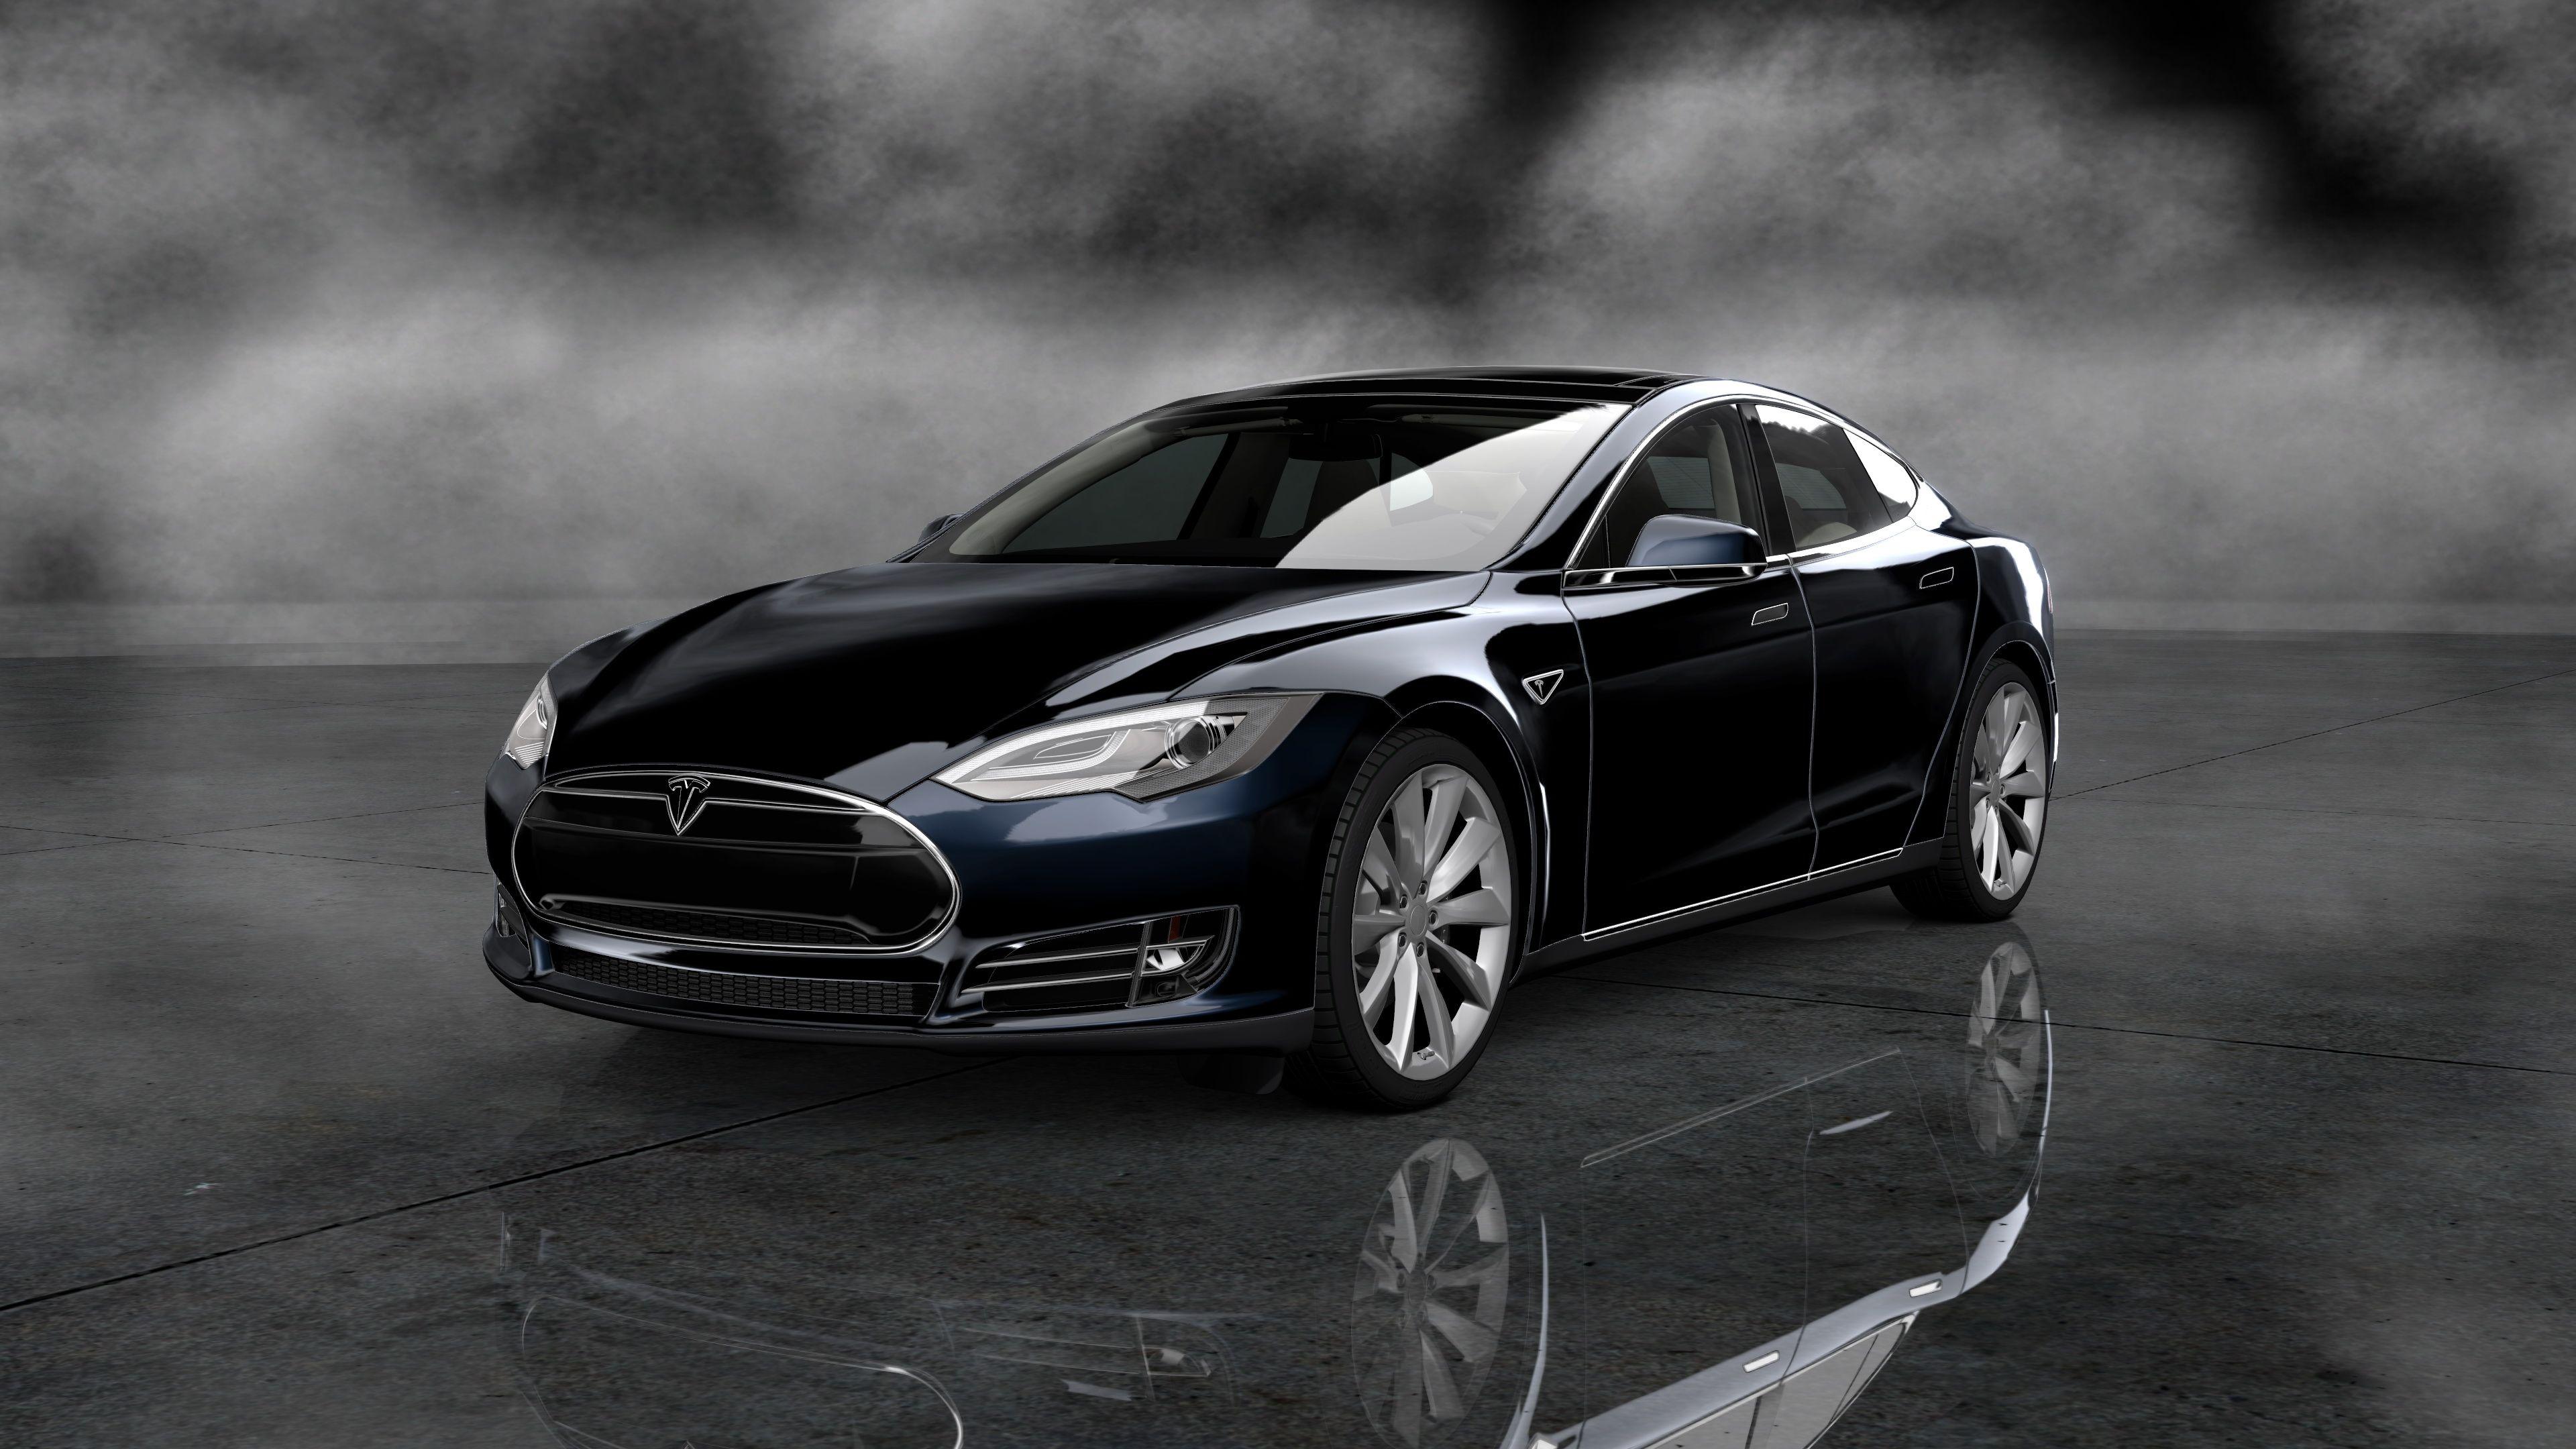 Latest Tesla Model S Image. SNP89 HD Quality Wallpaper